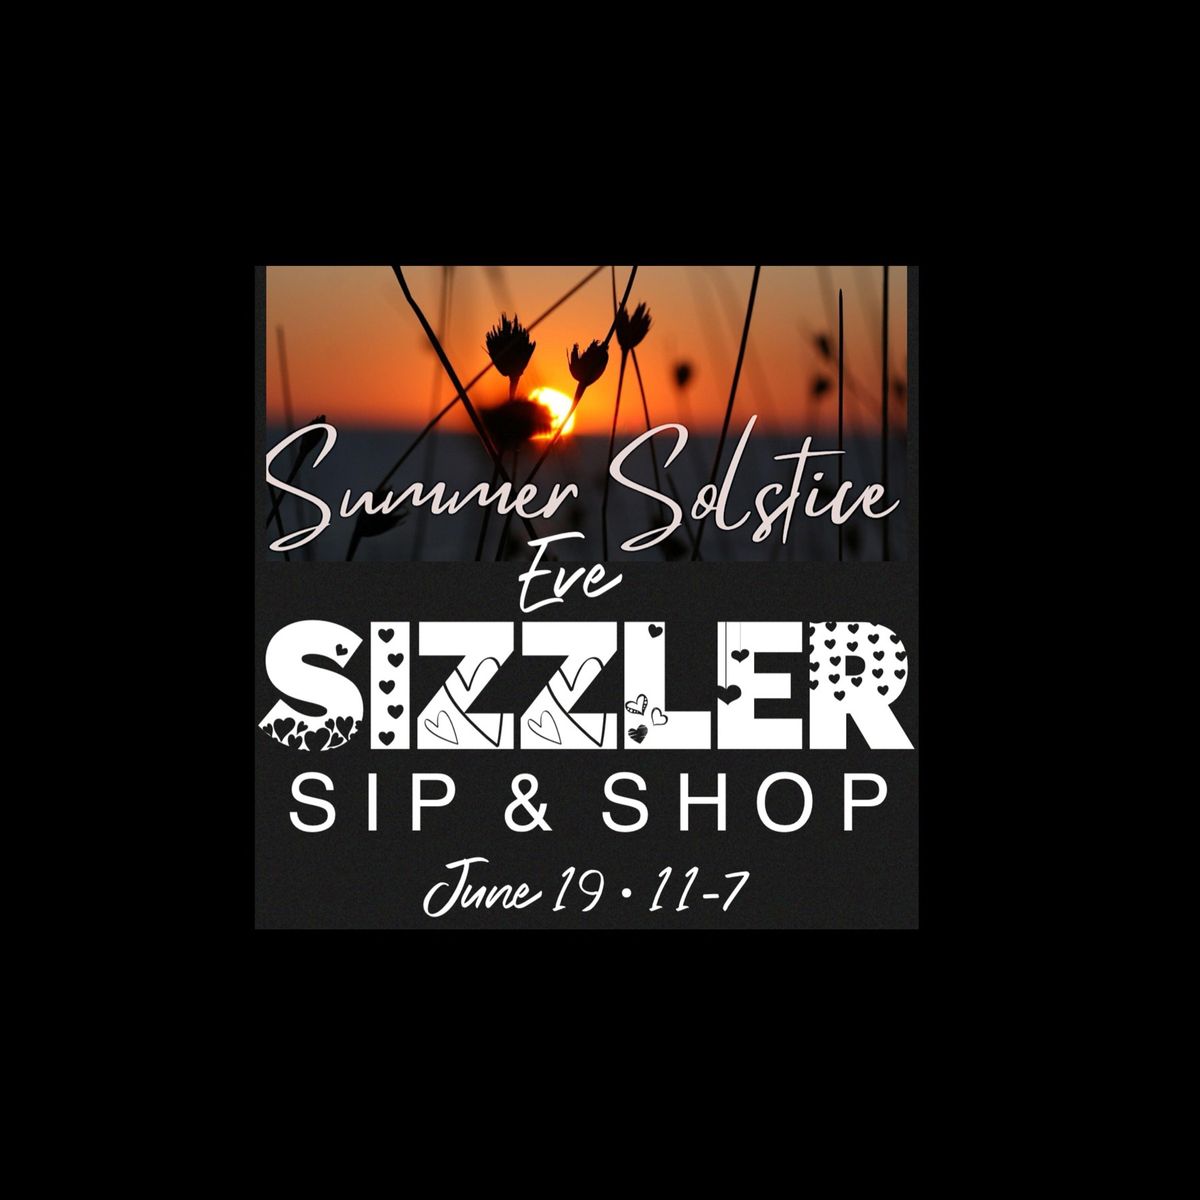 Summer Solstice Eve Sip & Shop